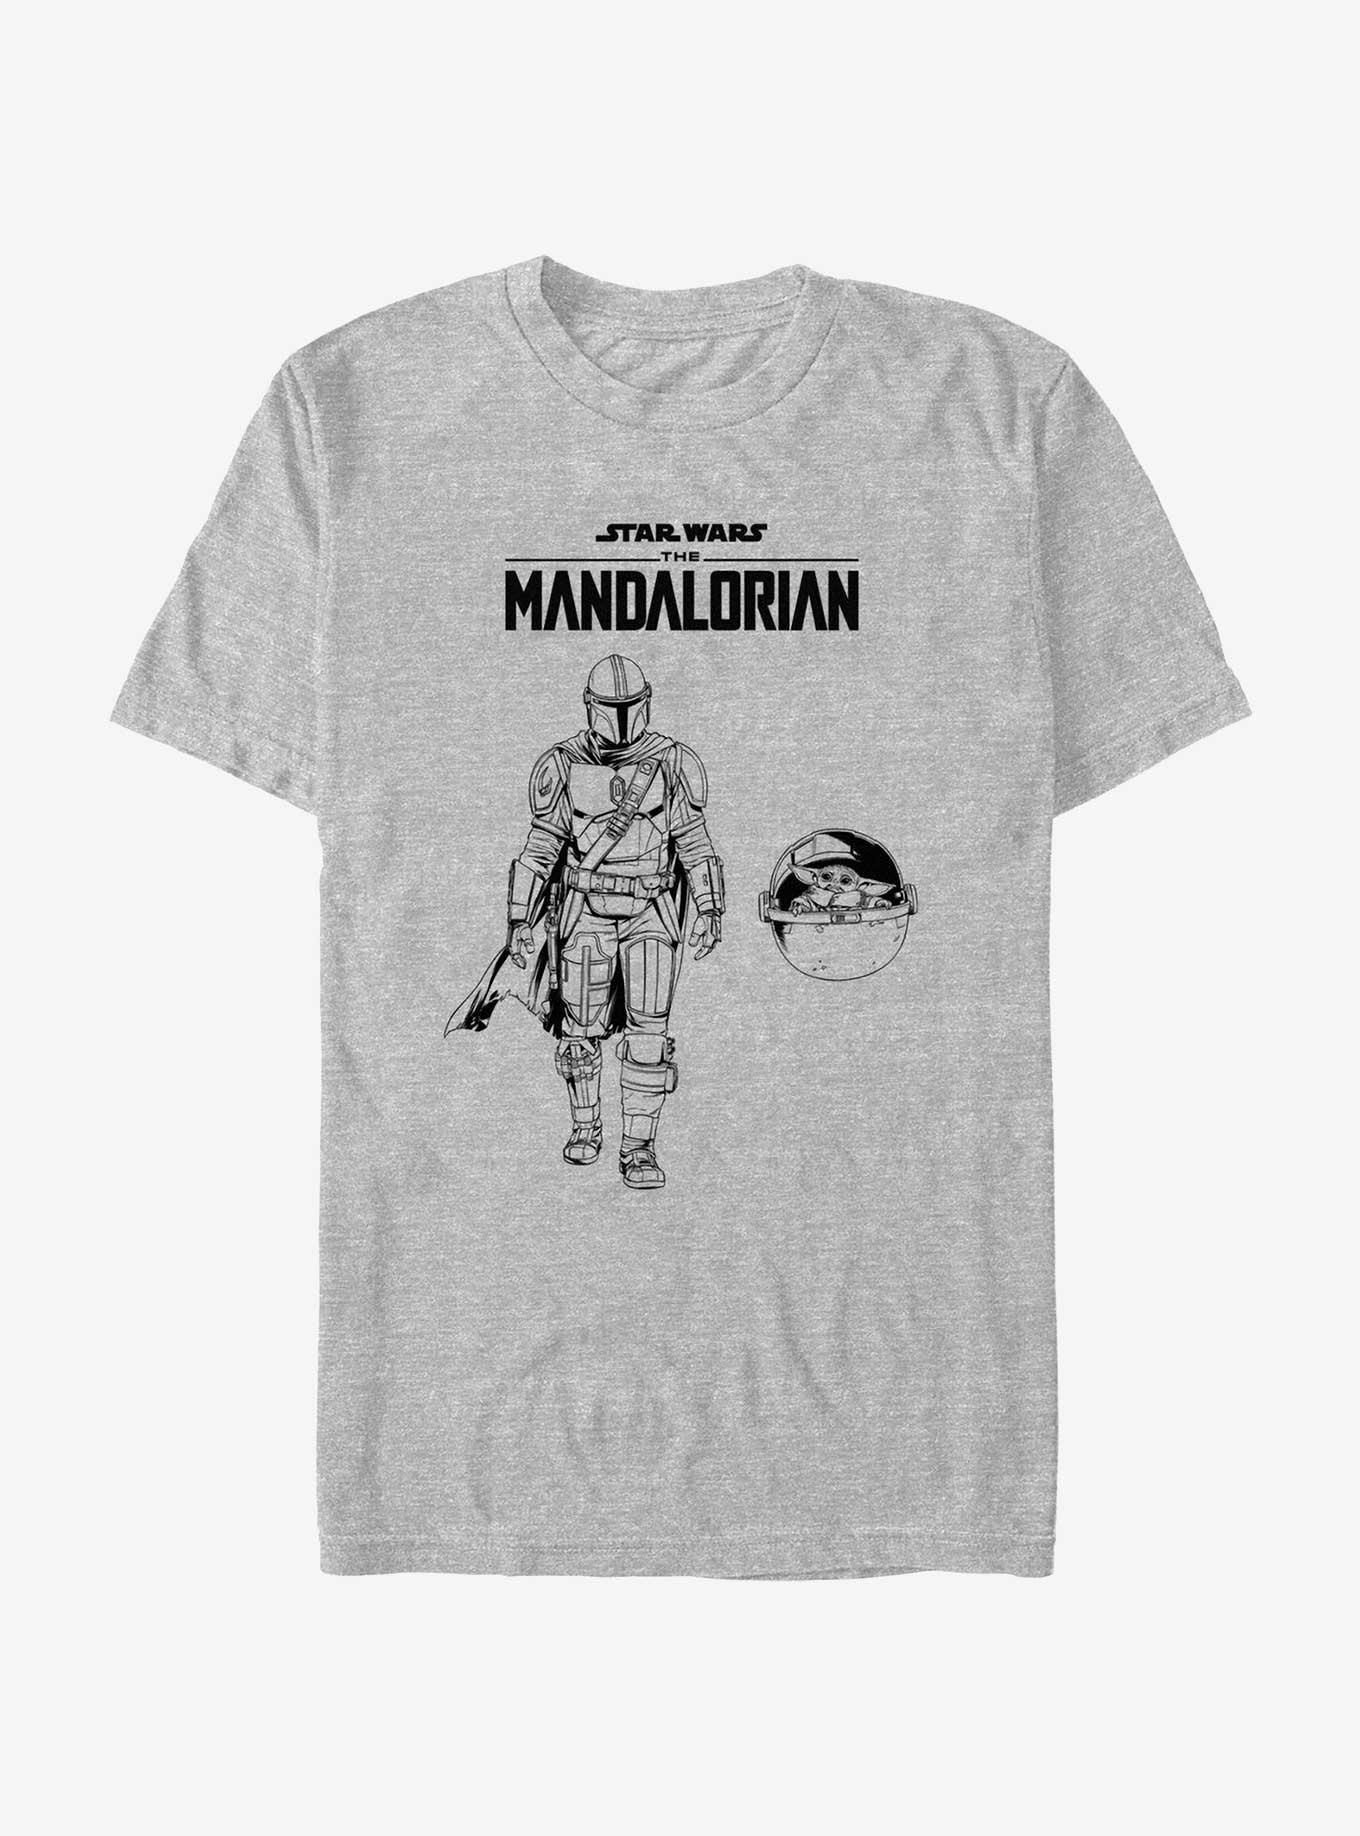 Star Wars The Mandalorian Going For A Walk T-Shirt